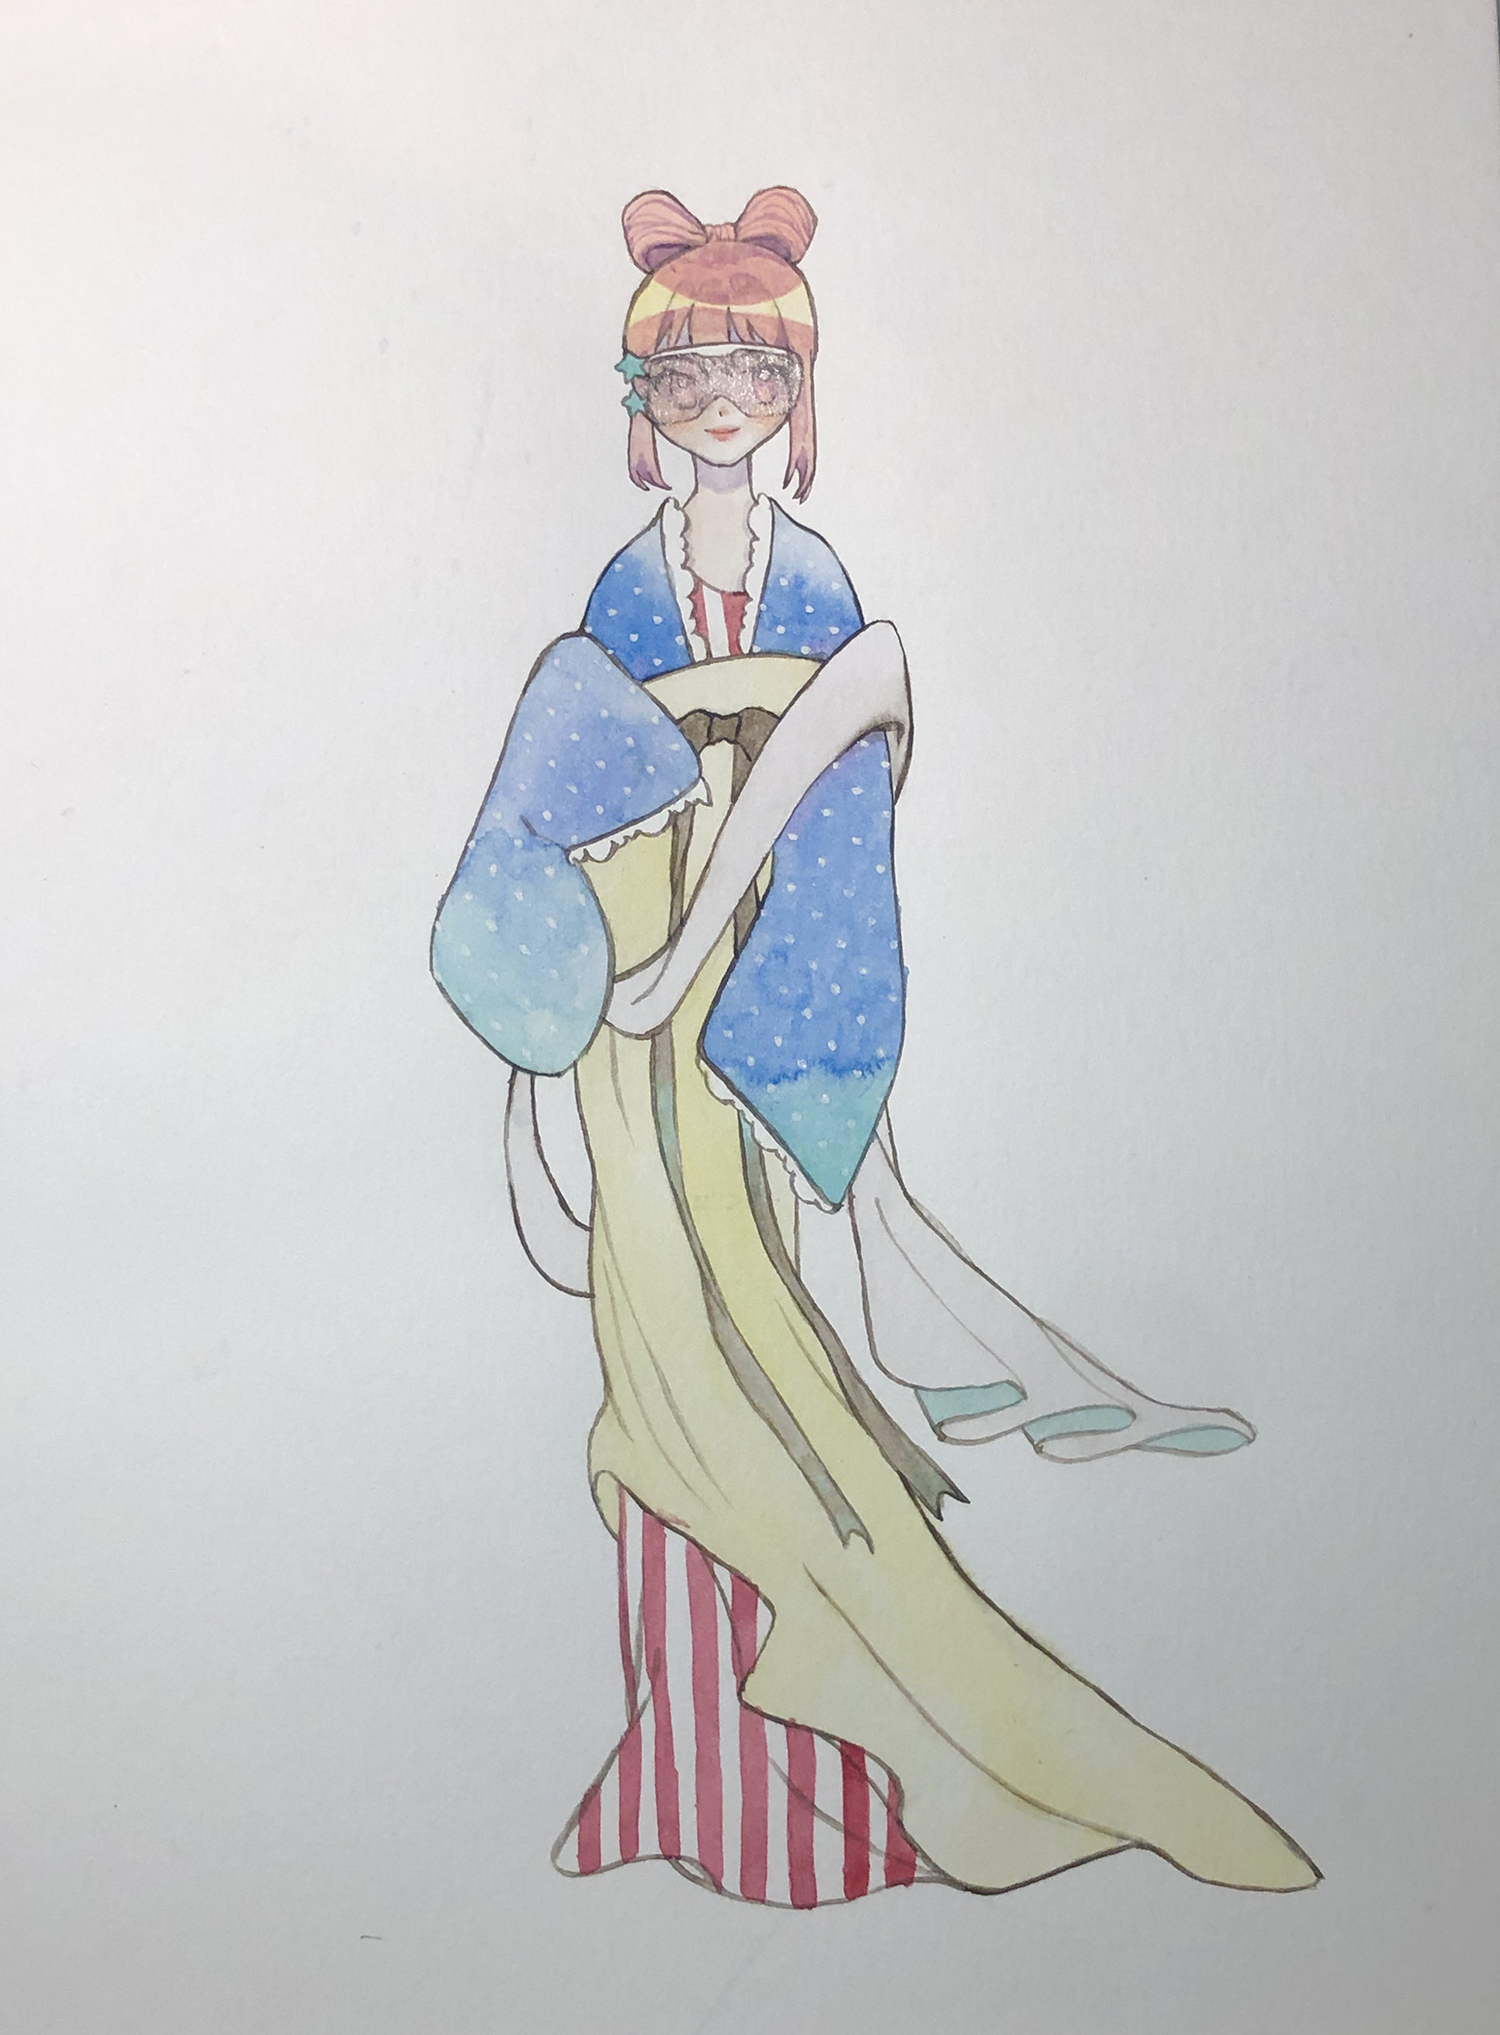 Japanese style illustration of a lady